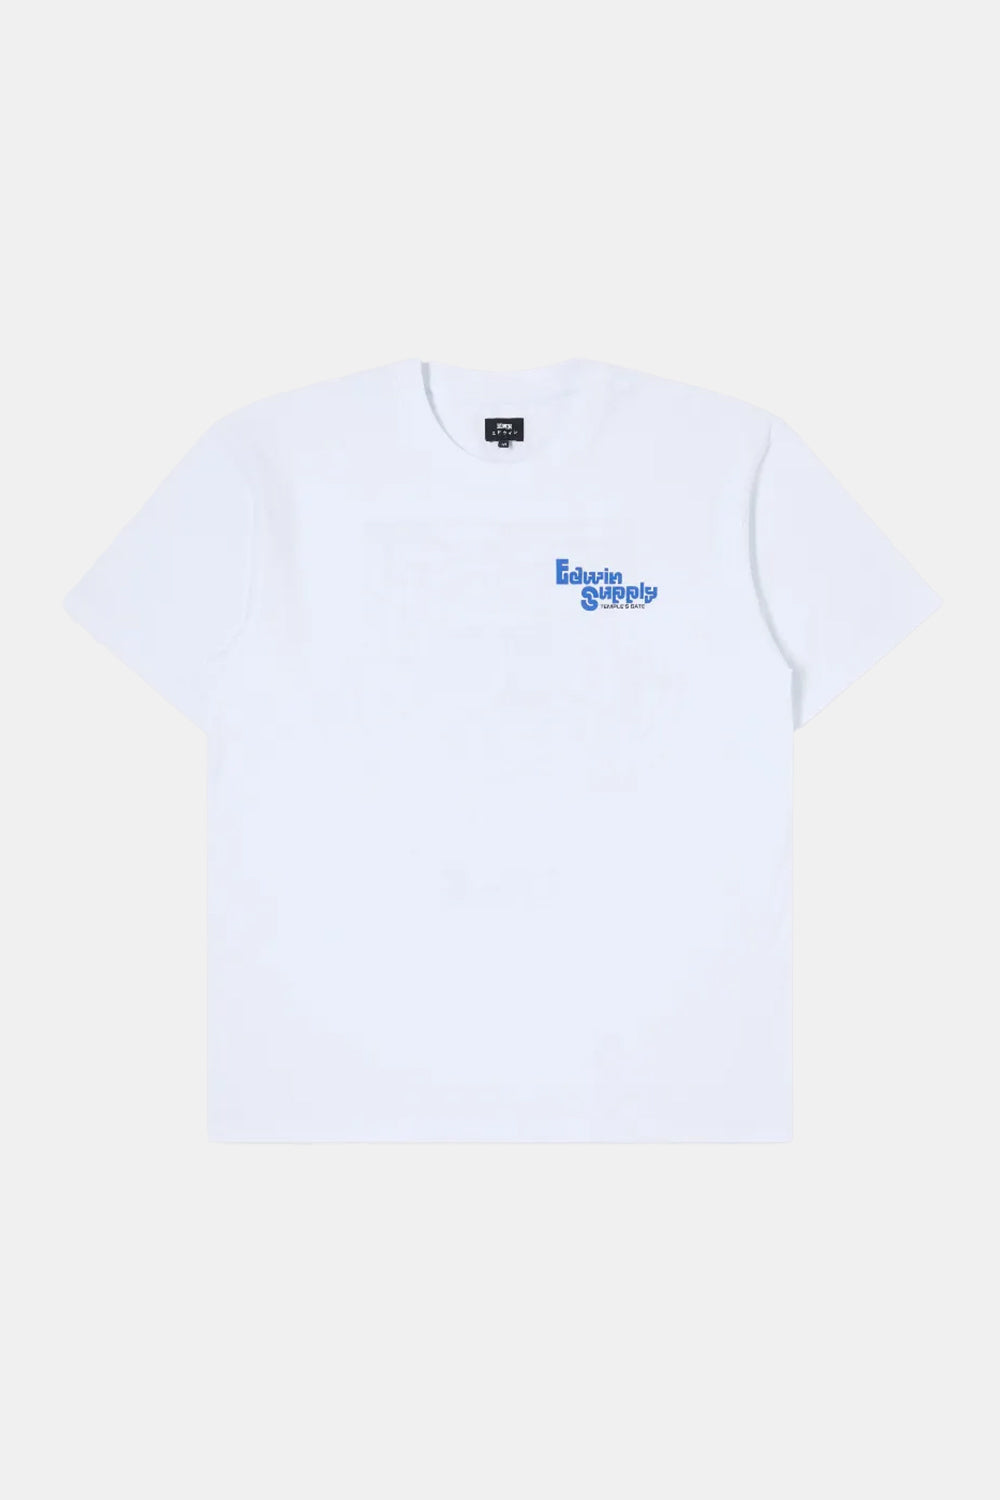 Edwin Temple's Gate T-Shirt (White Garment Wash)